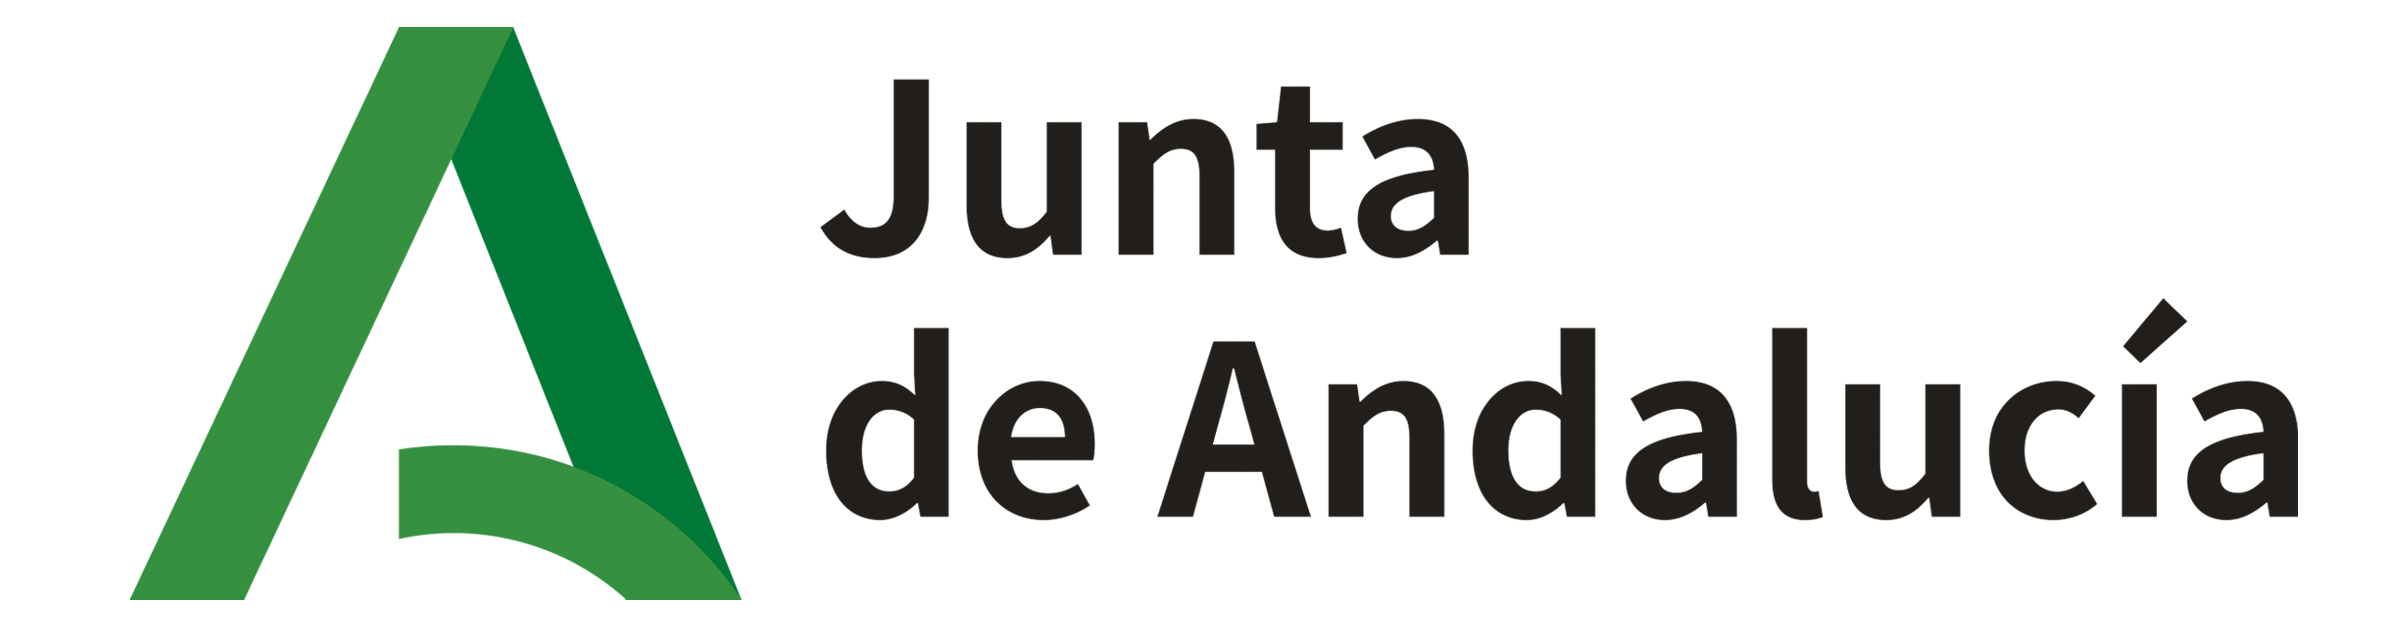 Portada de la Web oficial de la Junta de Andalucía